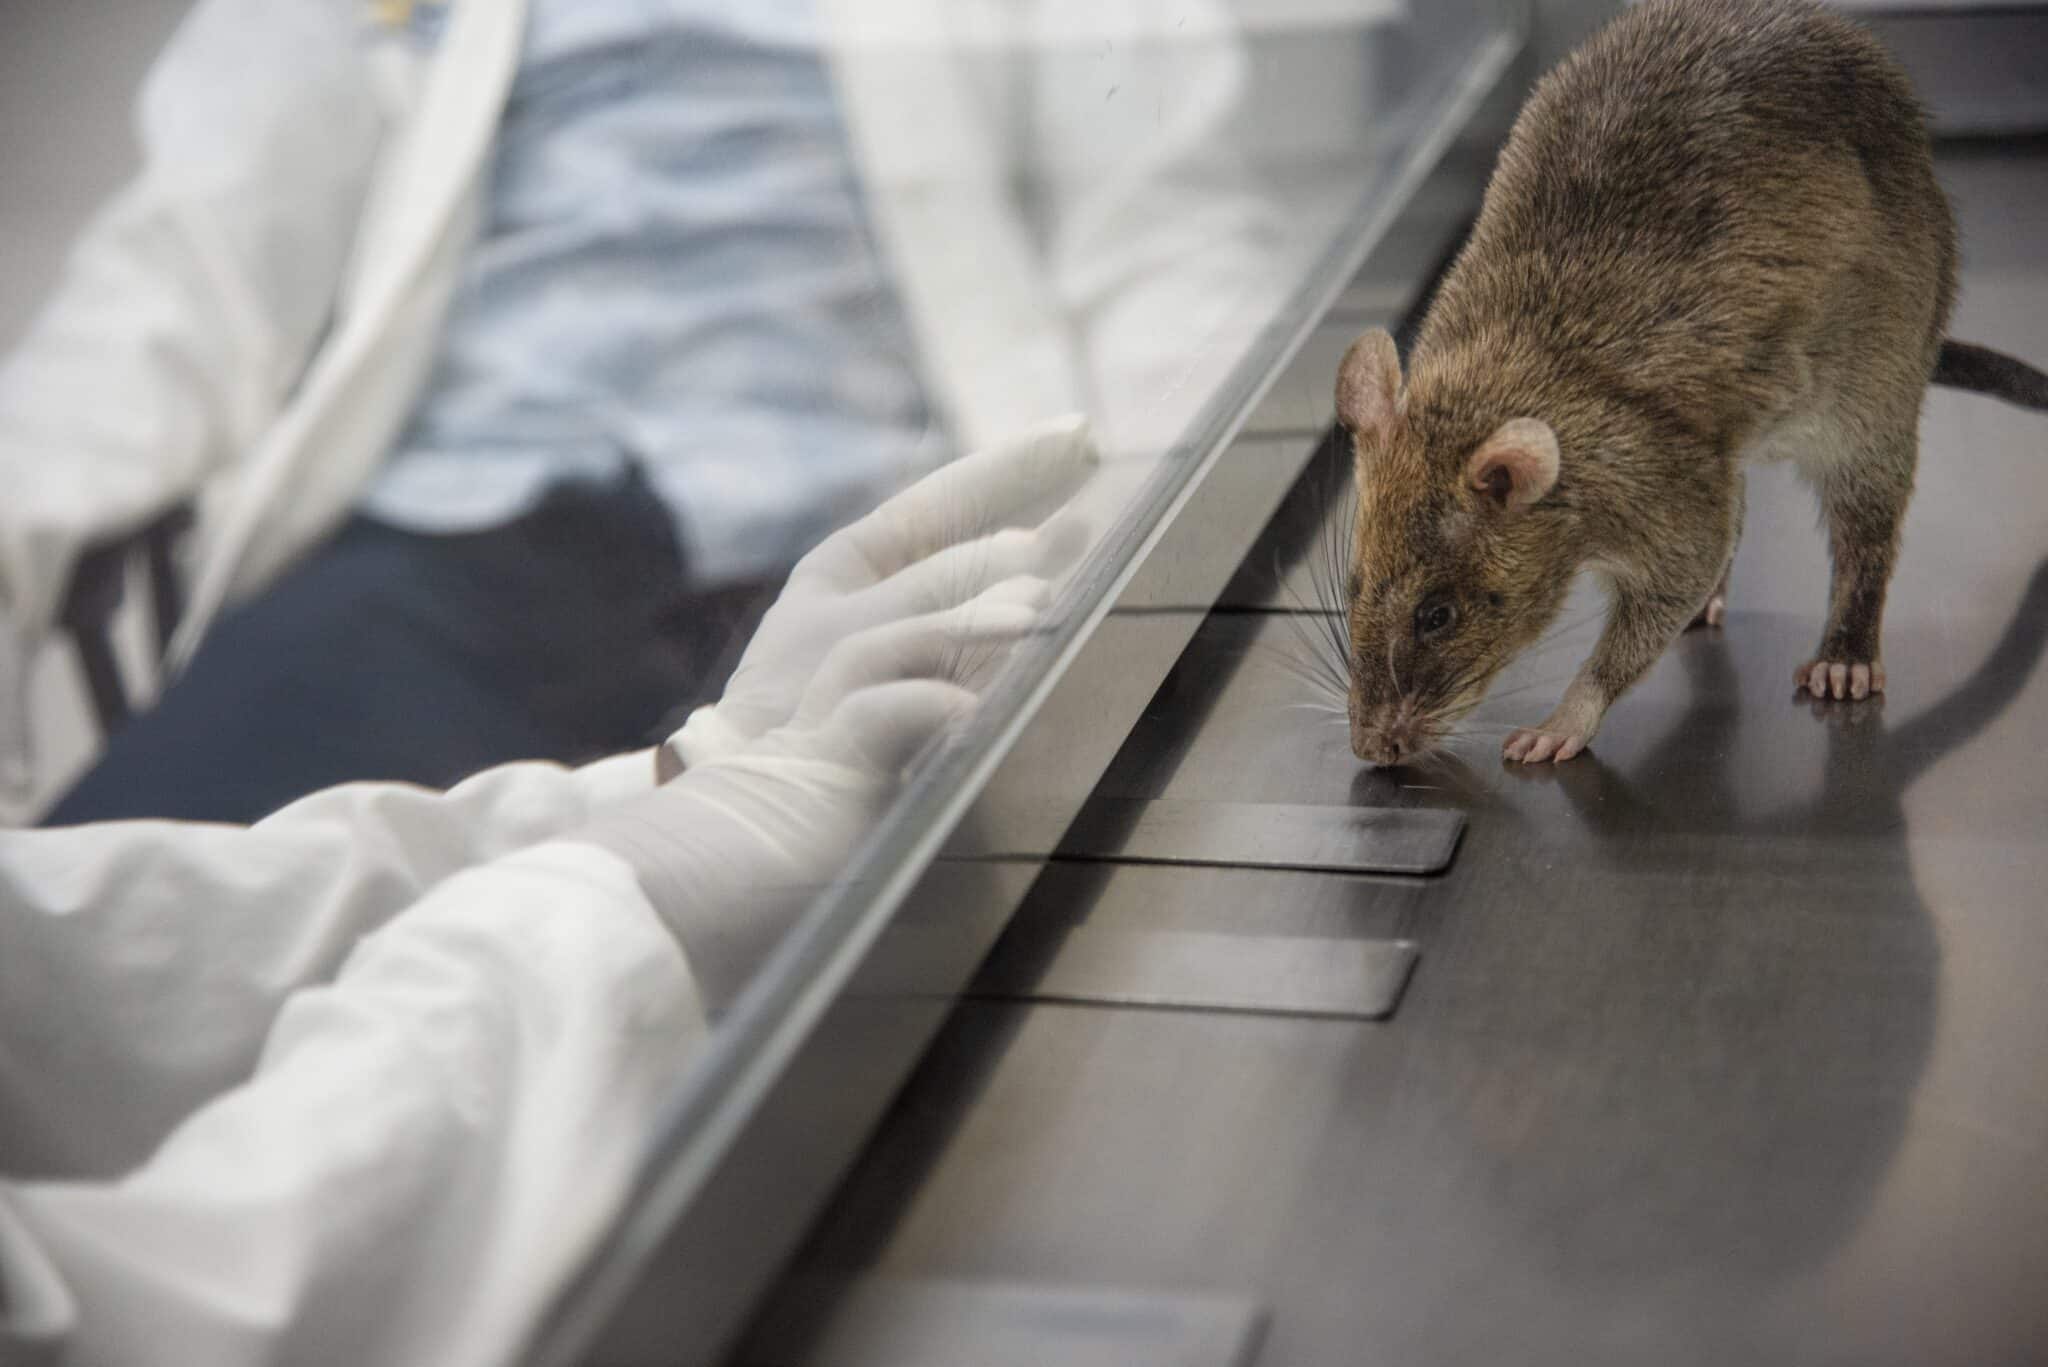 APOPO Adoption Rat Carolina detecting tuberculosis using her sense of smell